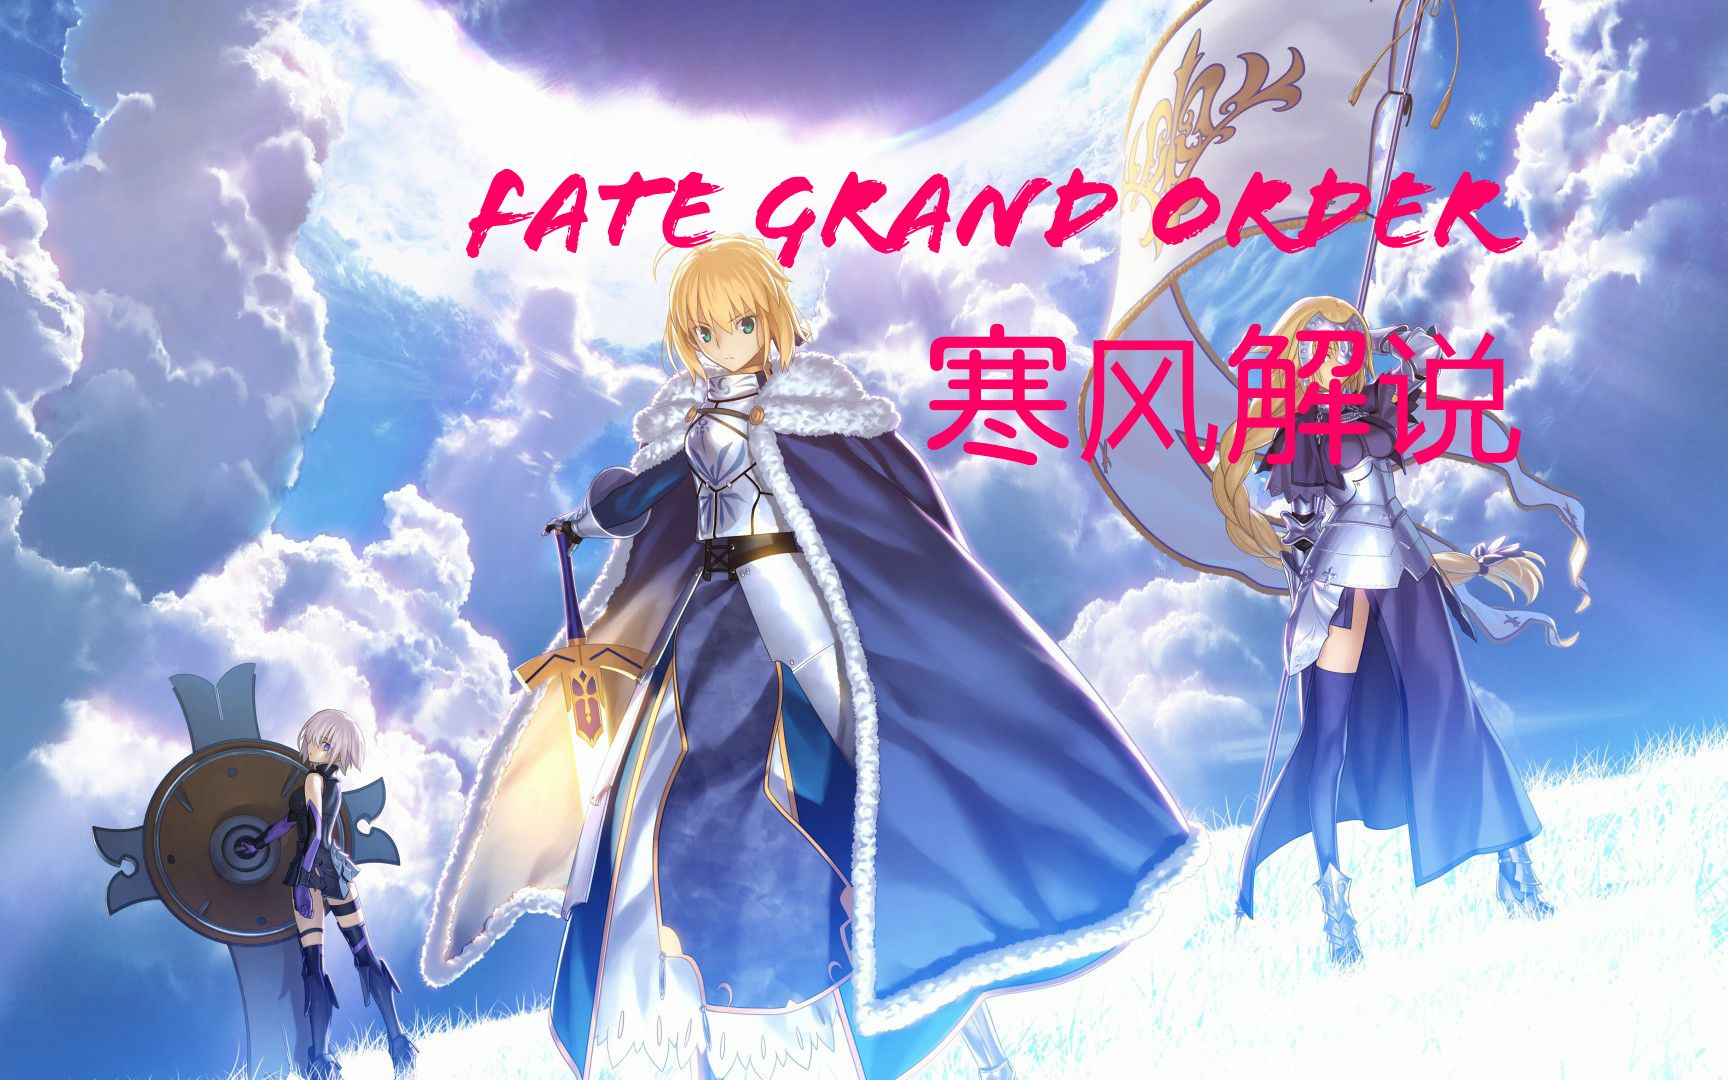 Fgo开荒实录 寒风解说 Fate Grand Order 游戏初体验第六期 无限剑制1 哔哩哔哩 つロ干杯 Bilibili